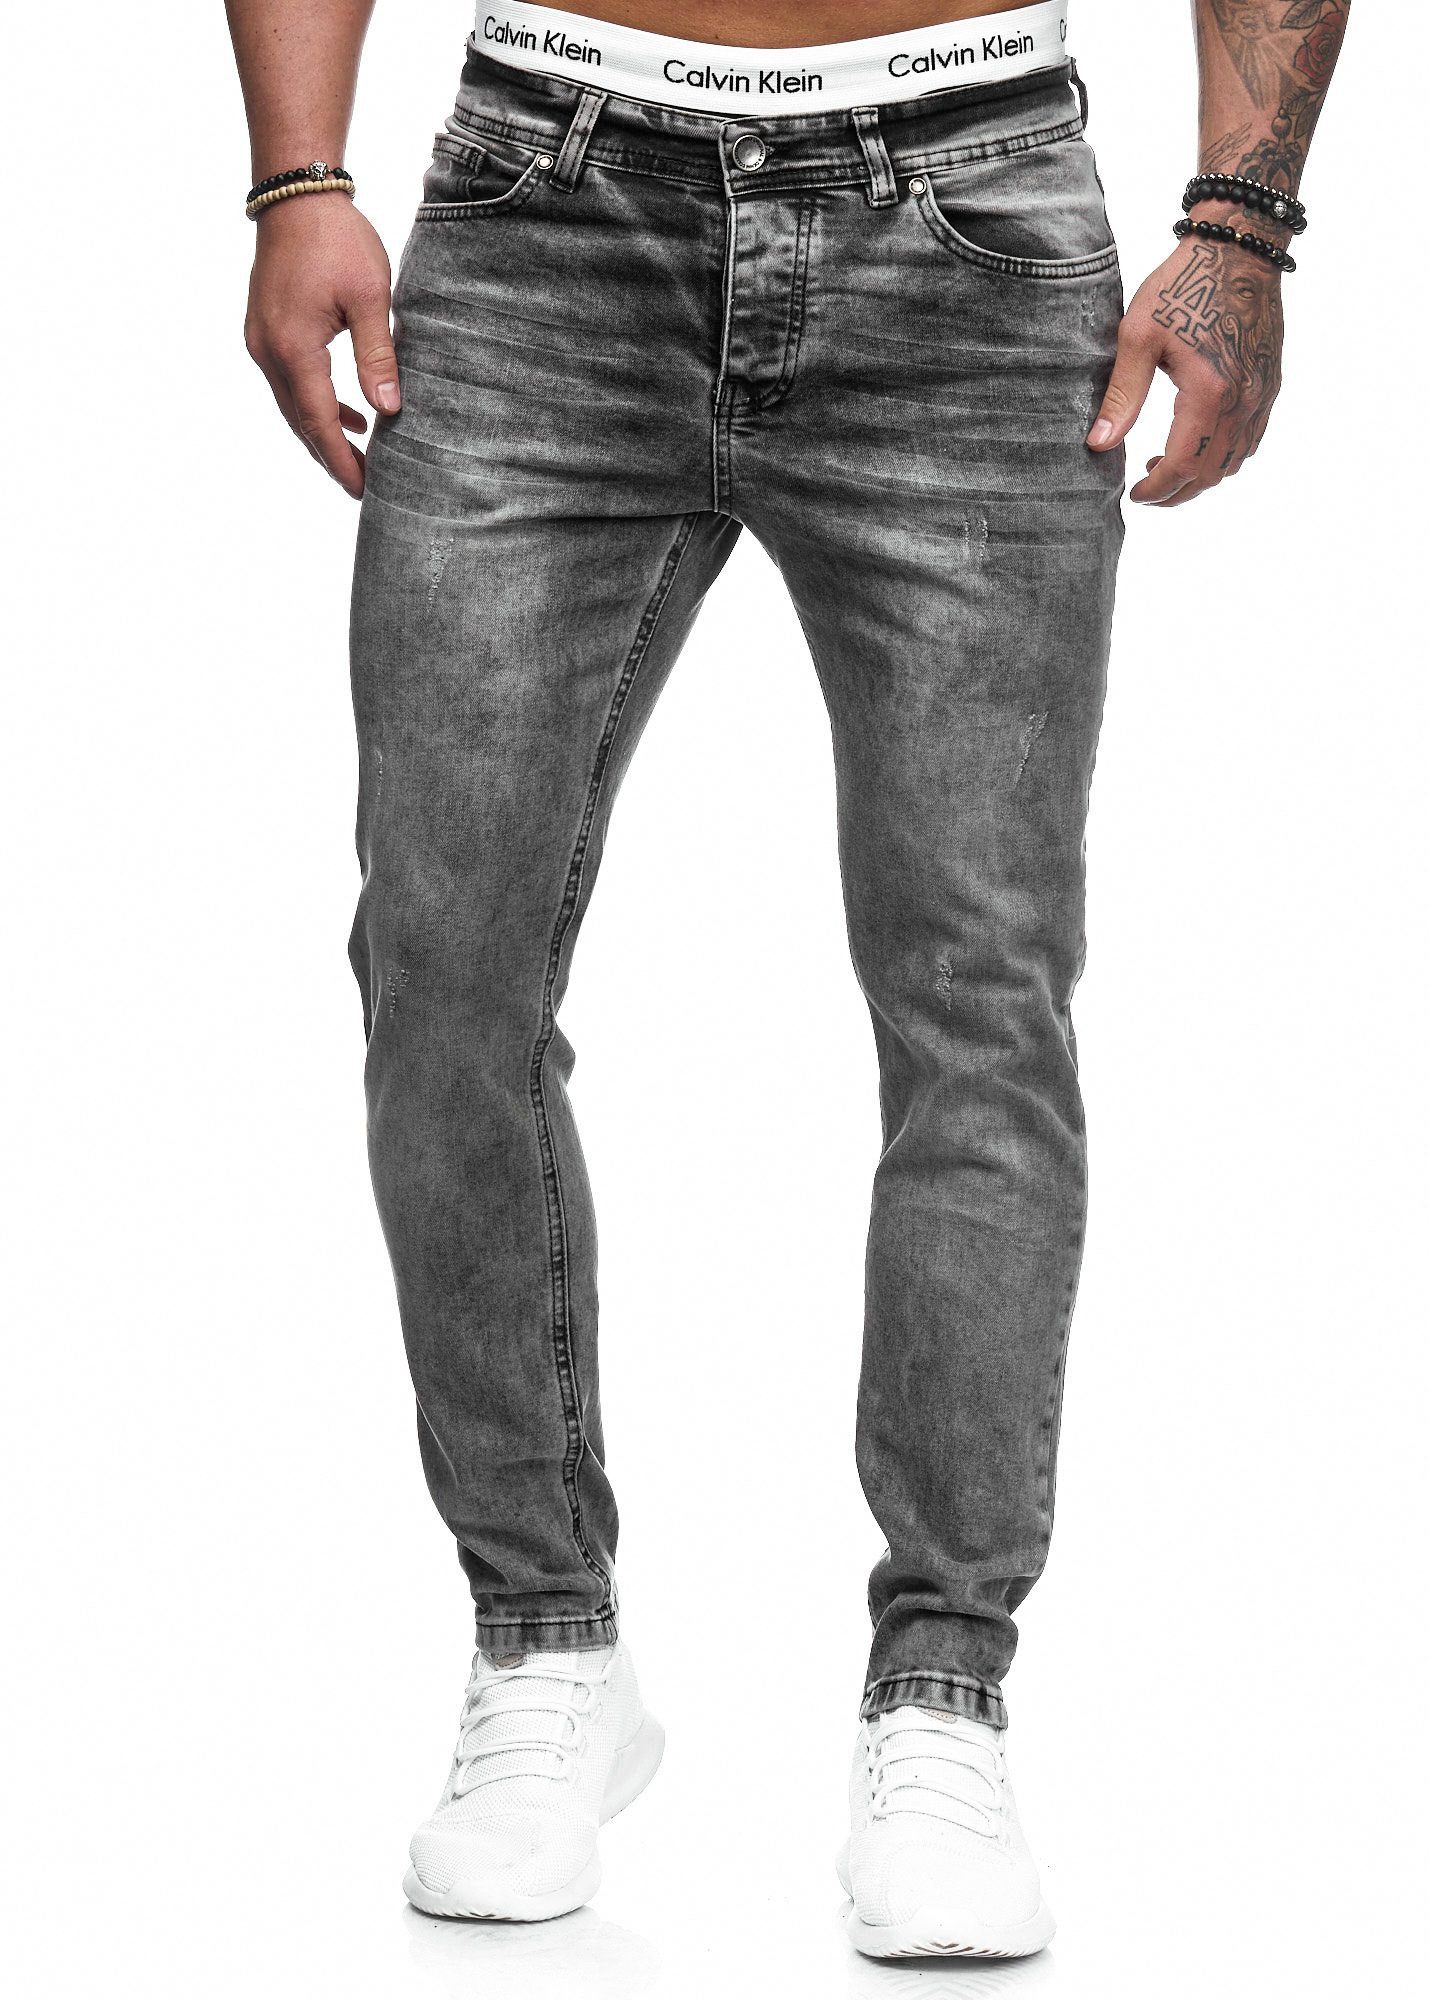 Code47 Slim-fit-Jeans Herren Designer Chino Jeans Hose Basic Stretch Jeanshose Slim Fit Grau 5079 | Slim-Fit Jeans